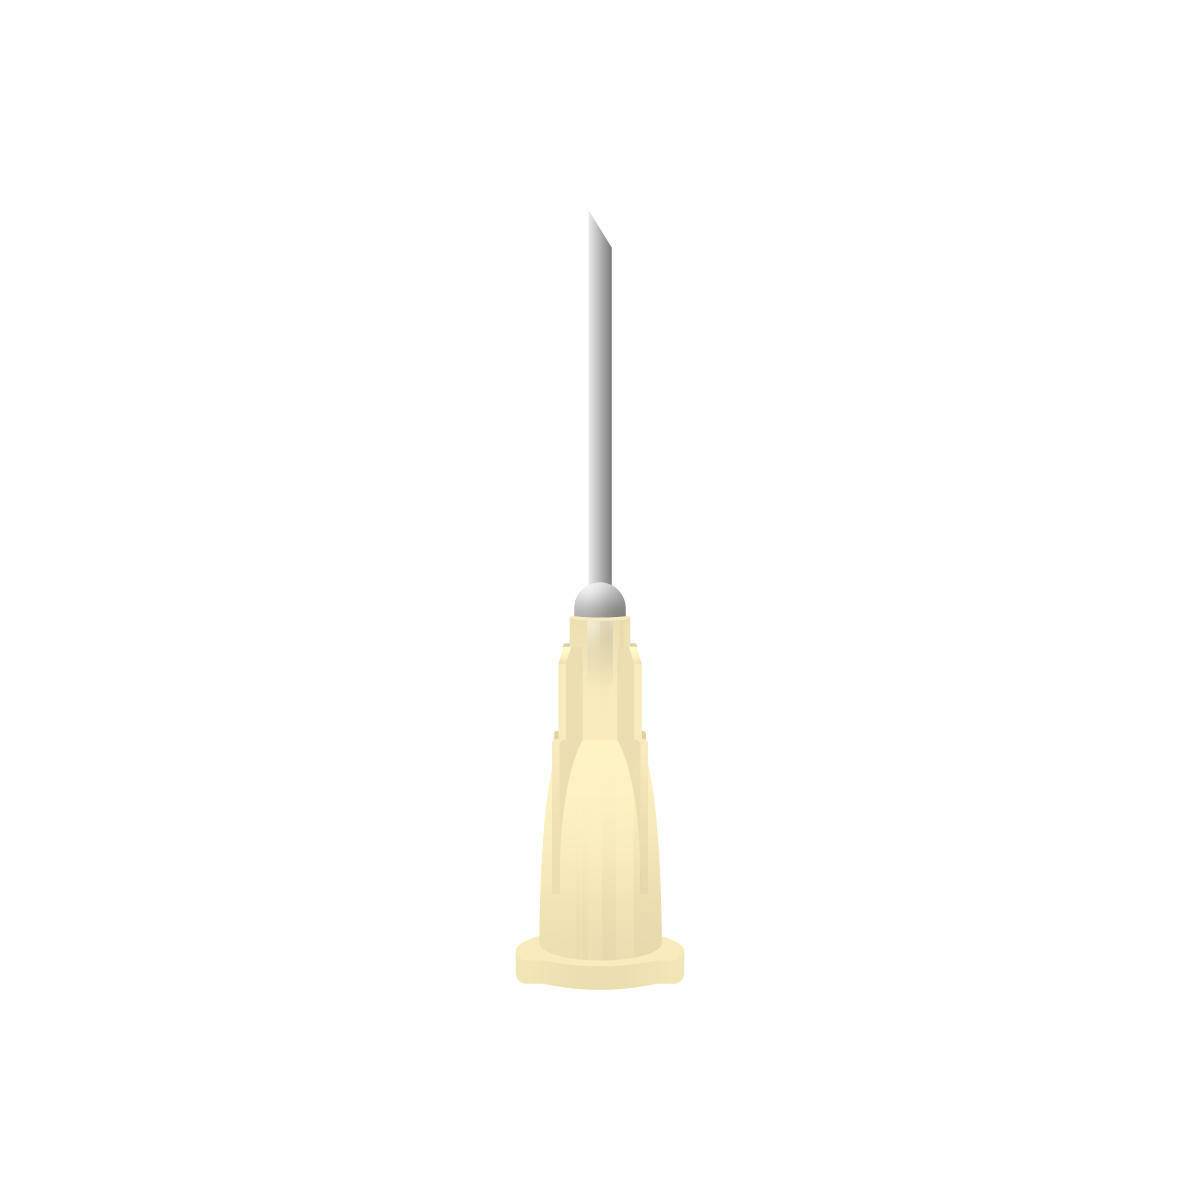 17g 3/4 inch Agriject Disposable Needles Poly Hub - UKMEDI